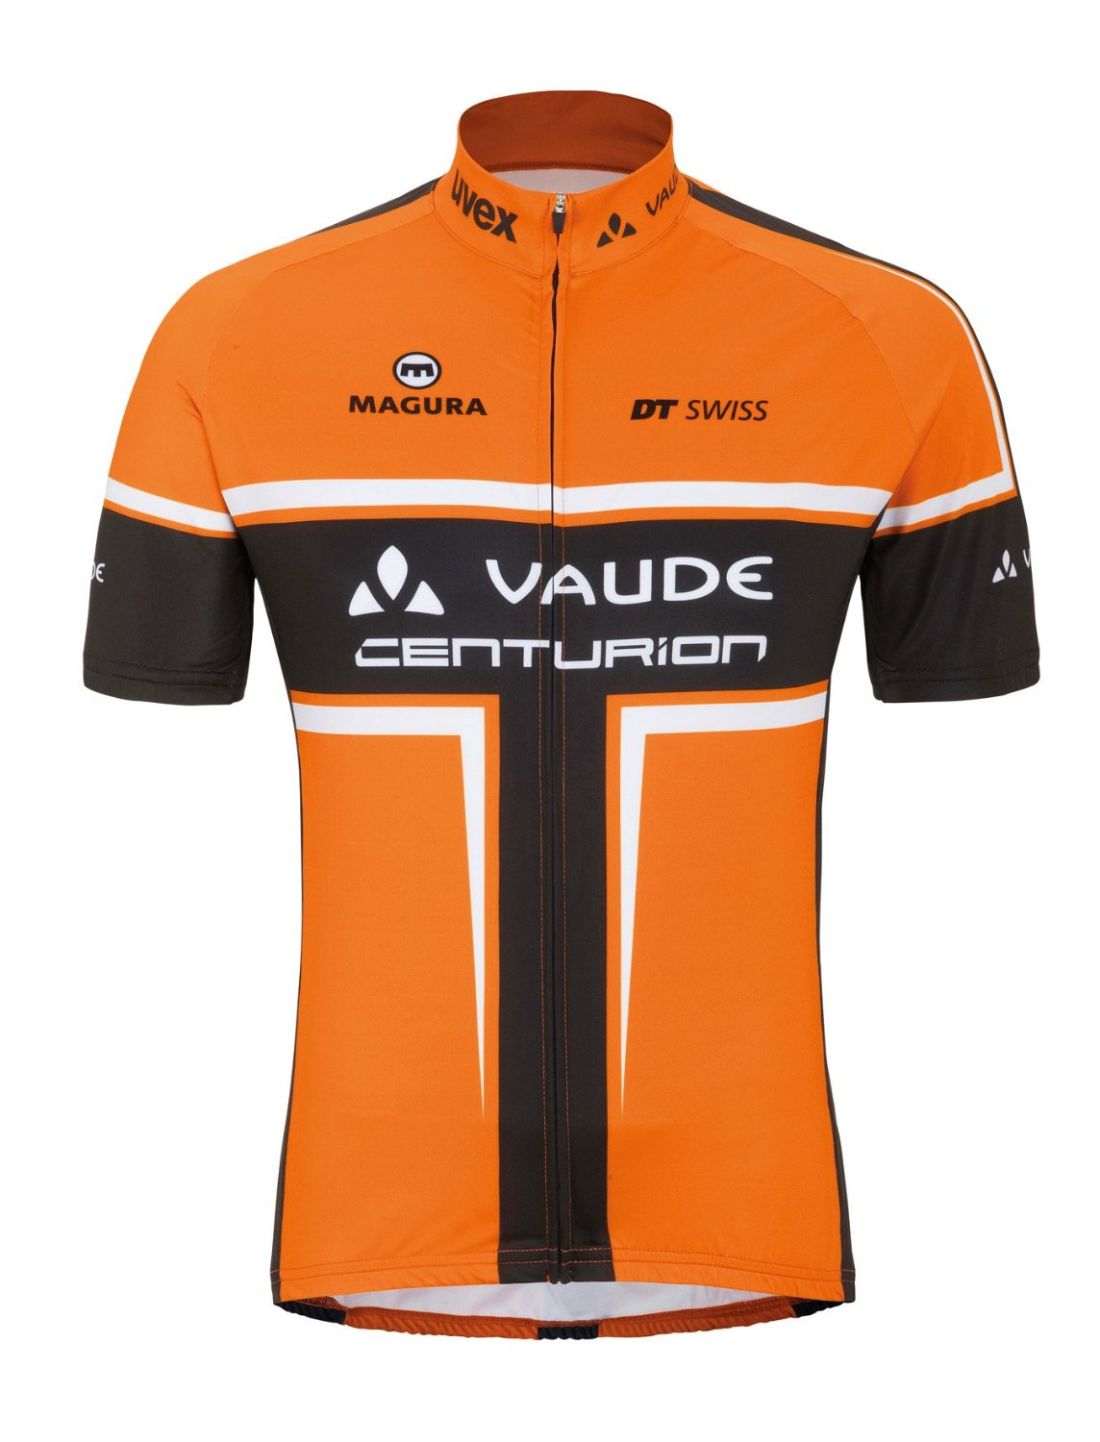 Vaude - Футболка для велоспорта Me Vaude-Centurion Tricot